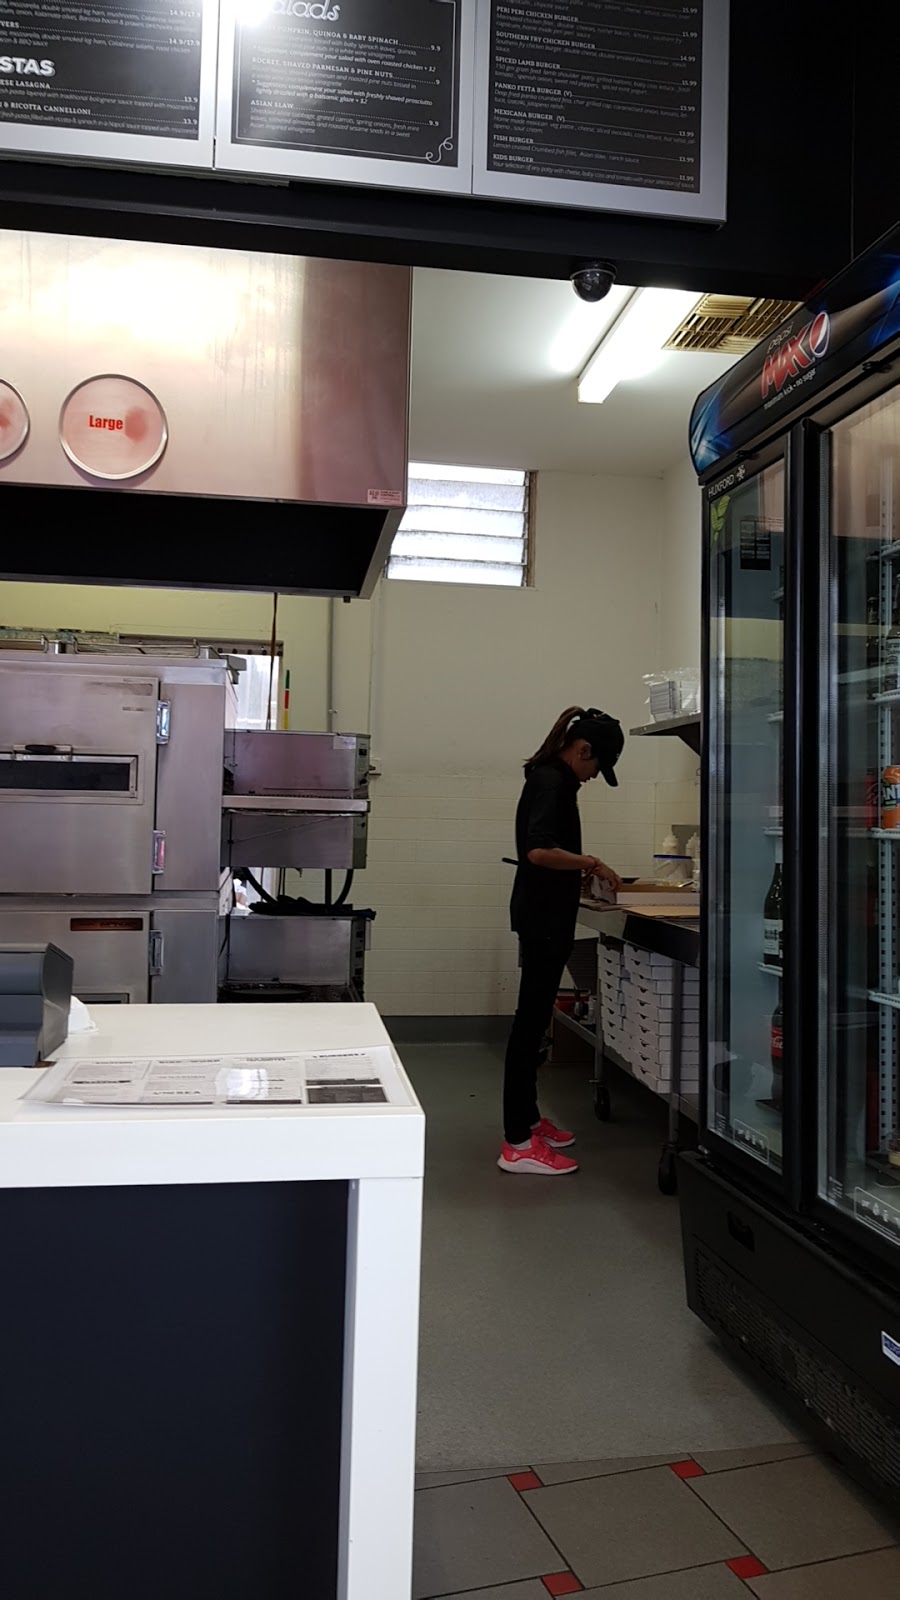 Surrey Hills Handcrafted Pizza & Burger | 927 Riversdale Rd, Surrey Hills VIC 3127, Australia | Phone: (03) 9836 5757